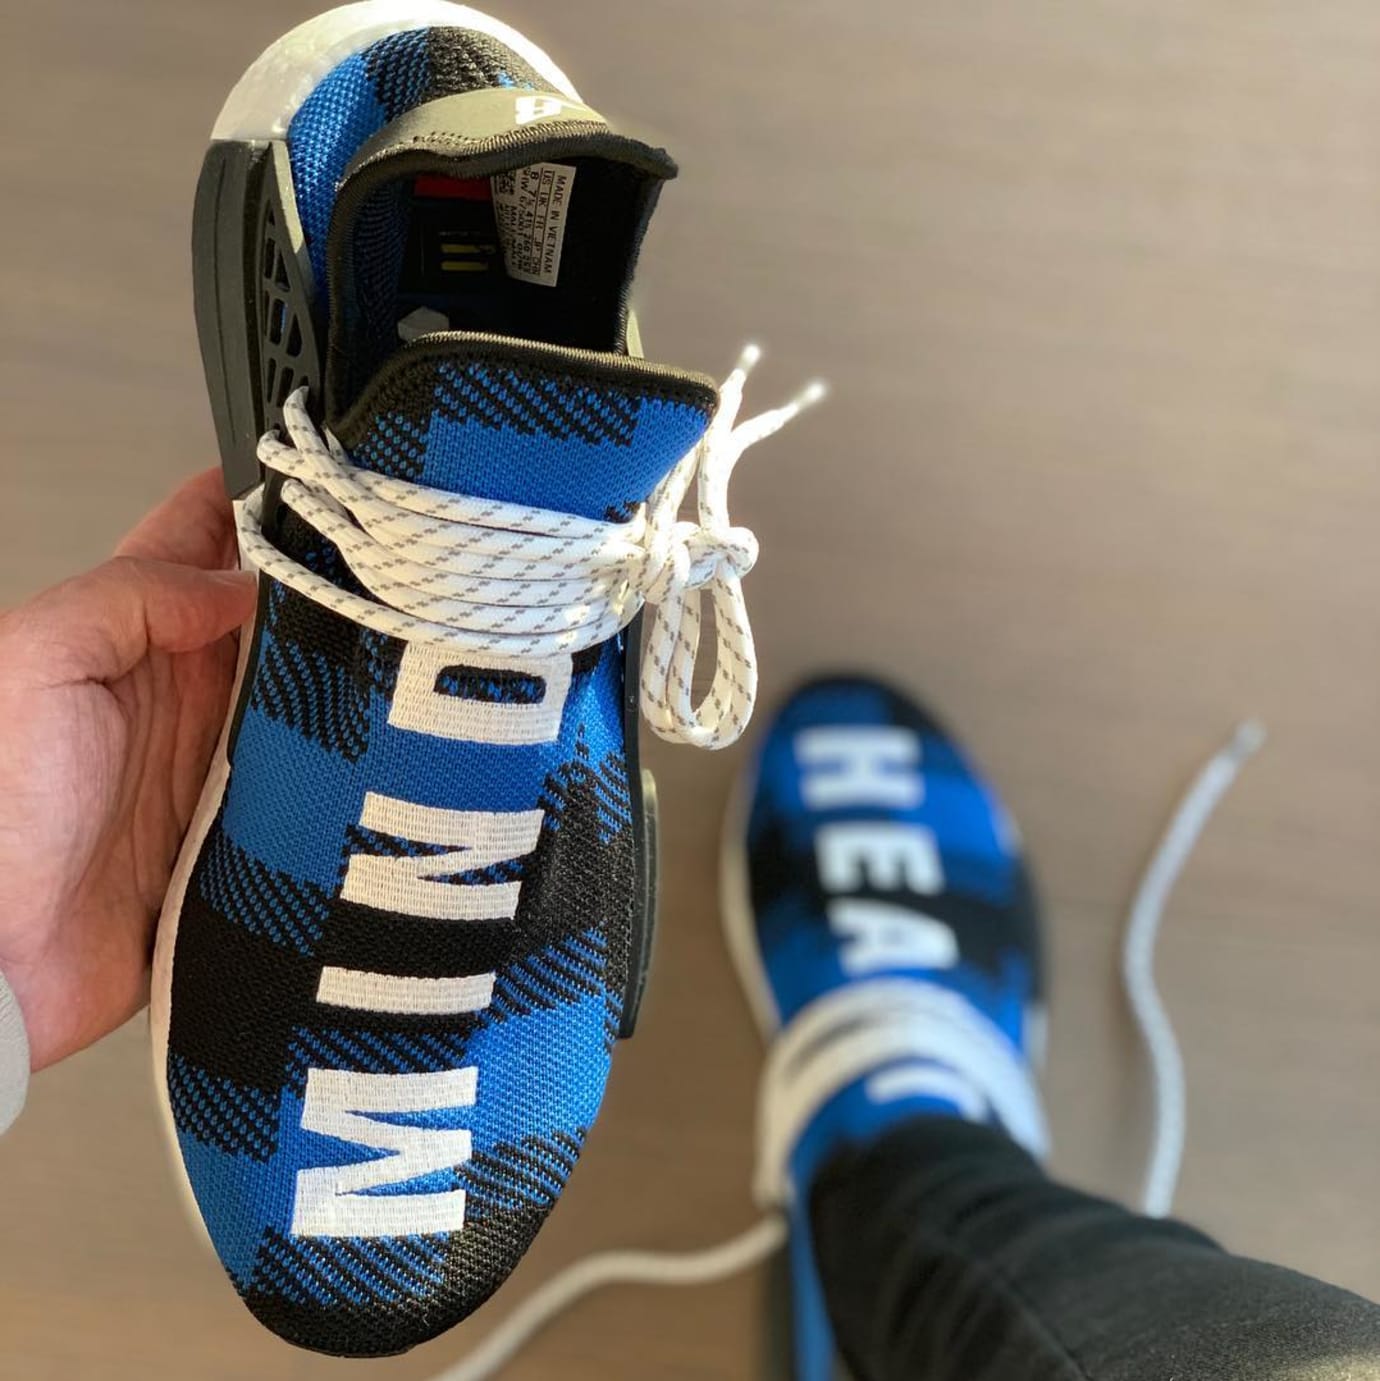 pharrell shoes 2019